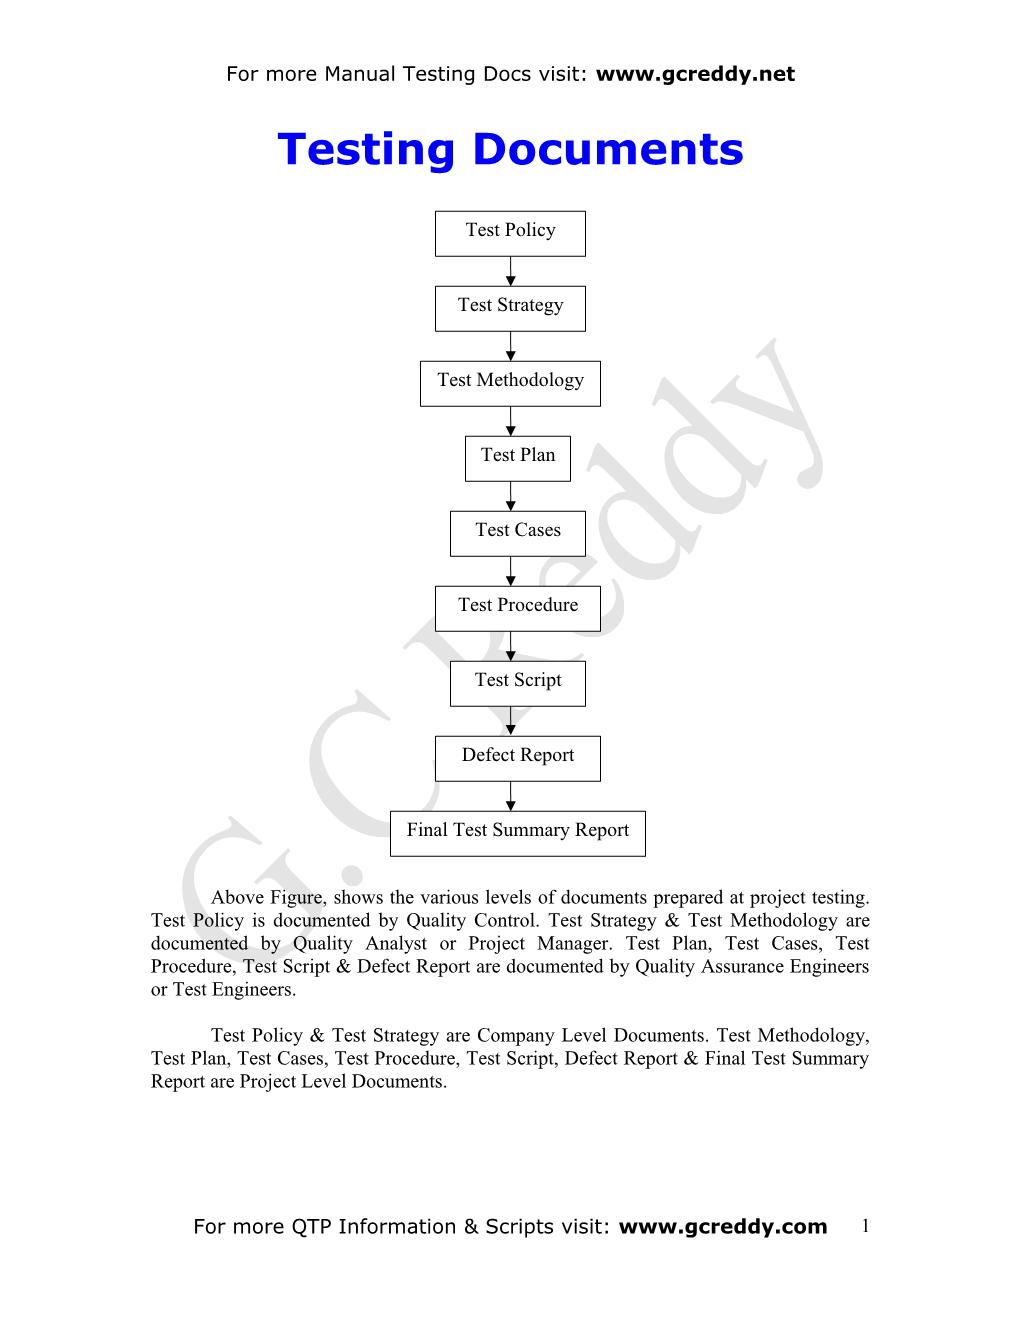 Testing Documents